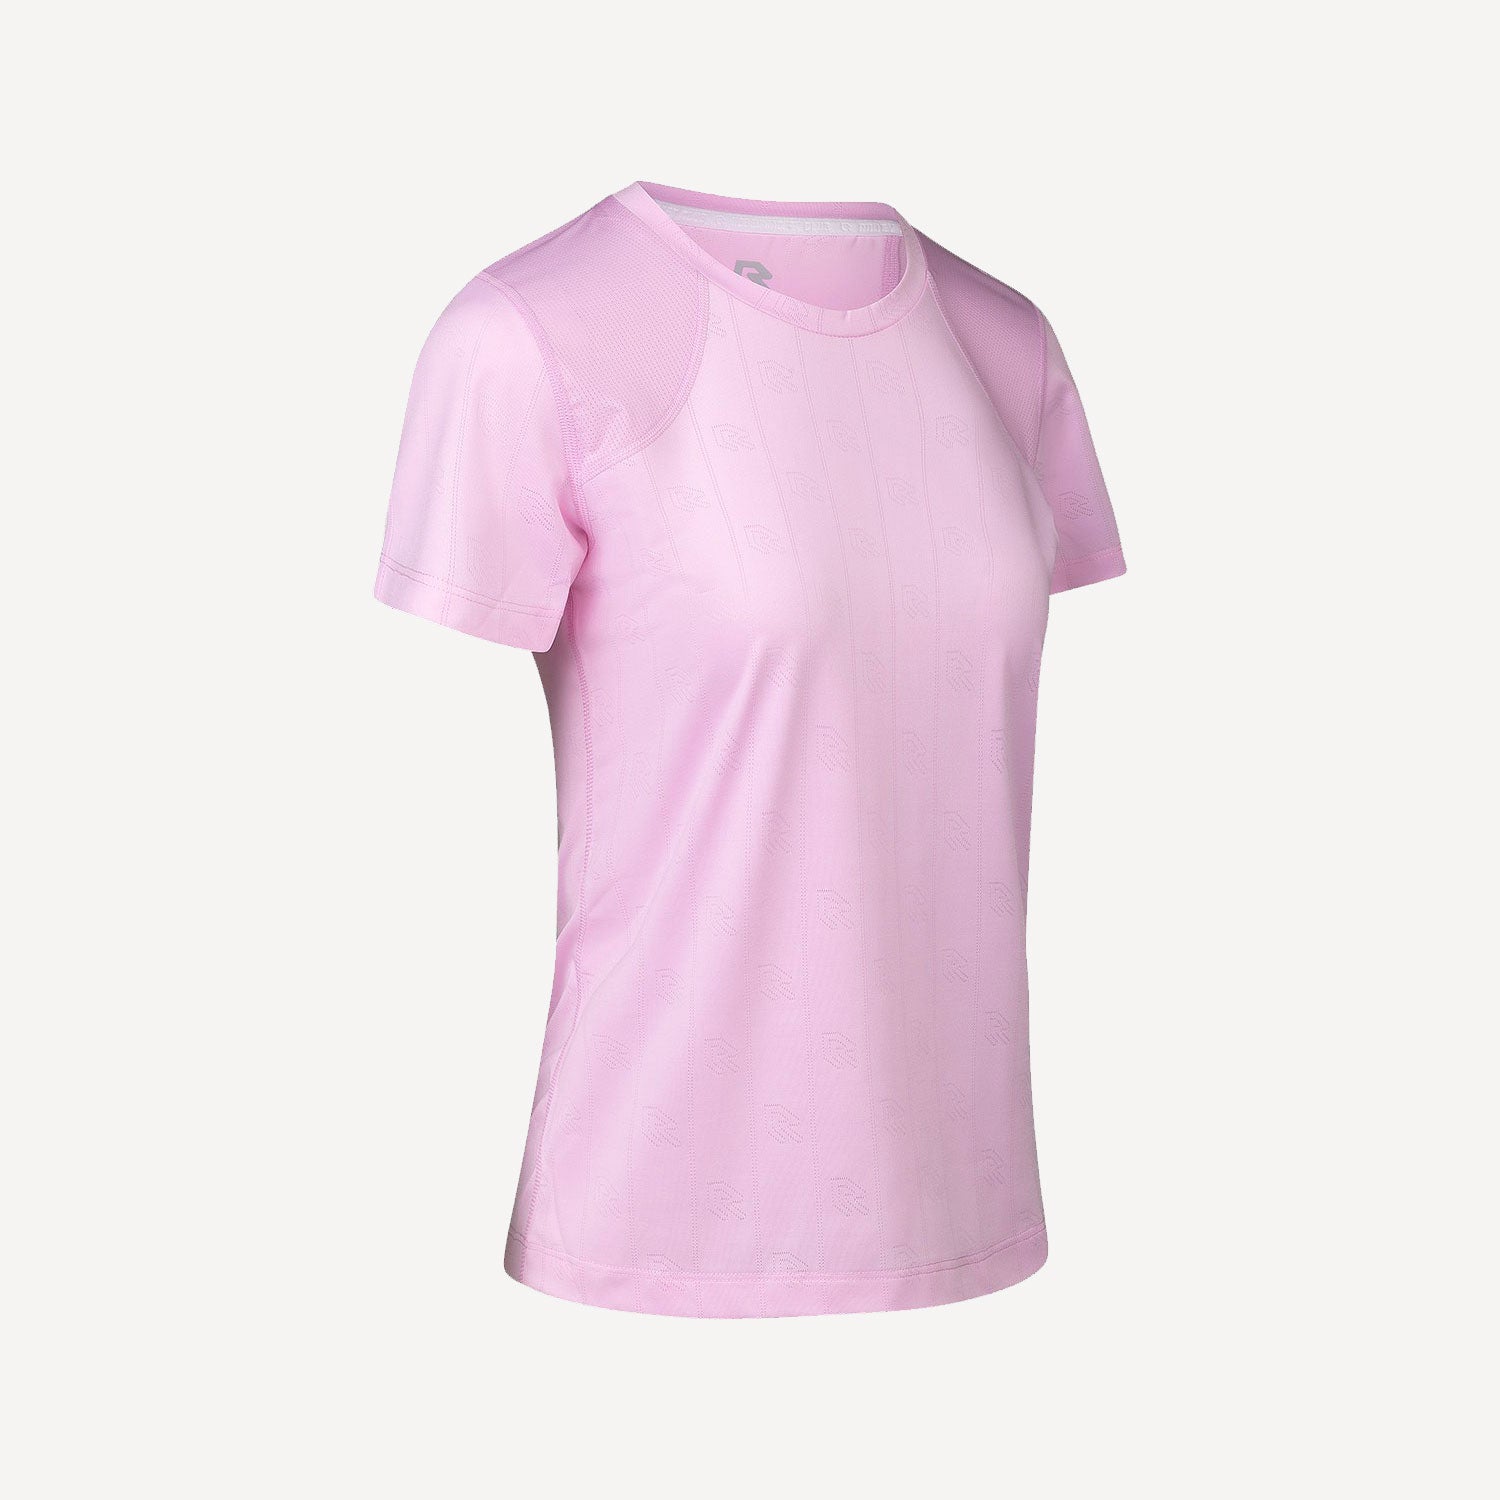 Robey Ace Women's Tennis Shirt - Pink (3)